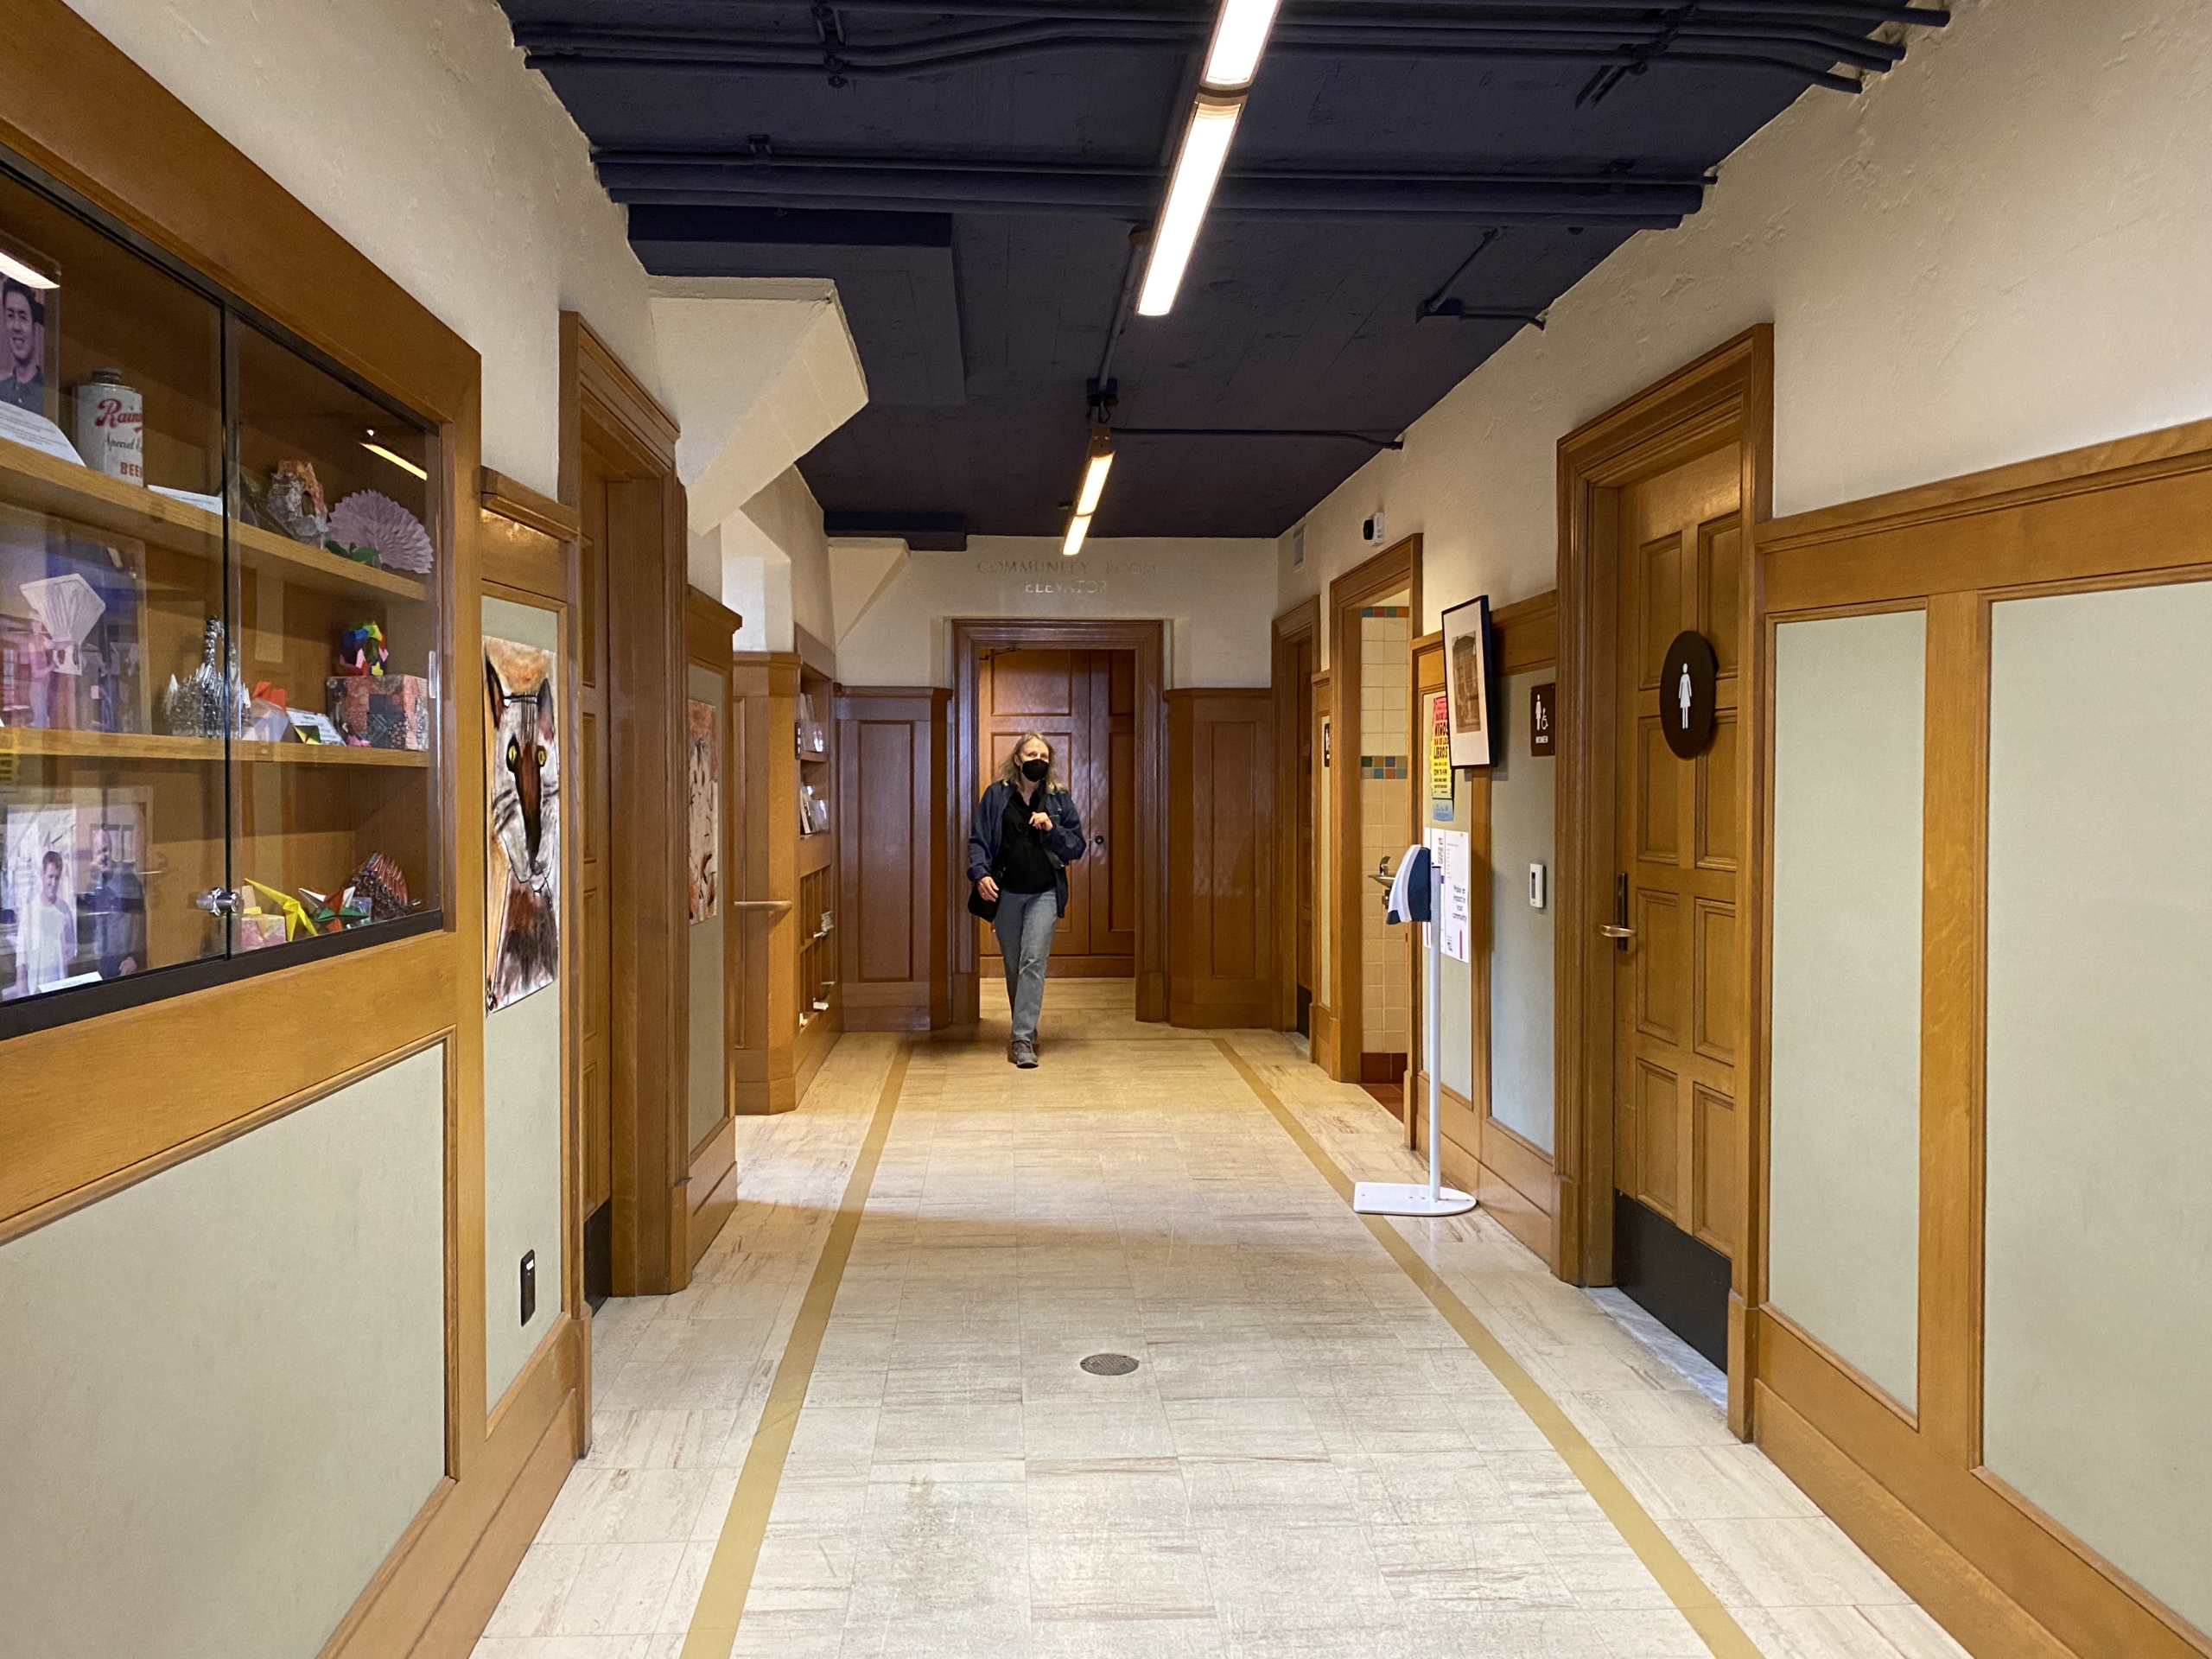 Downstairs corridor, Bernal Heights Library - San Francisco CA